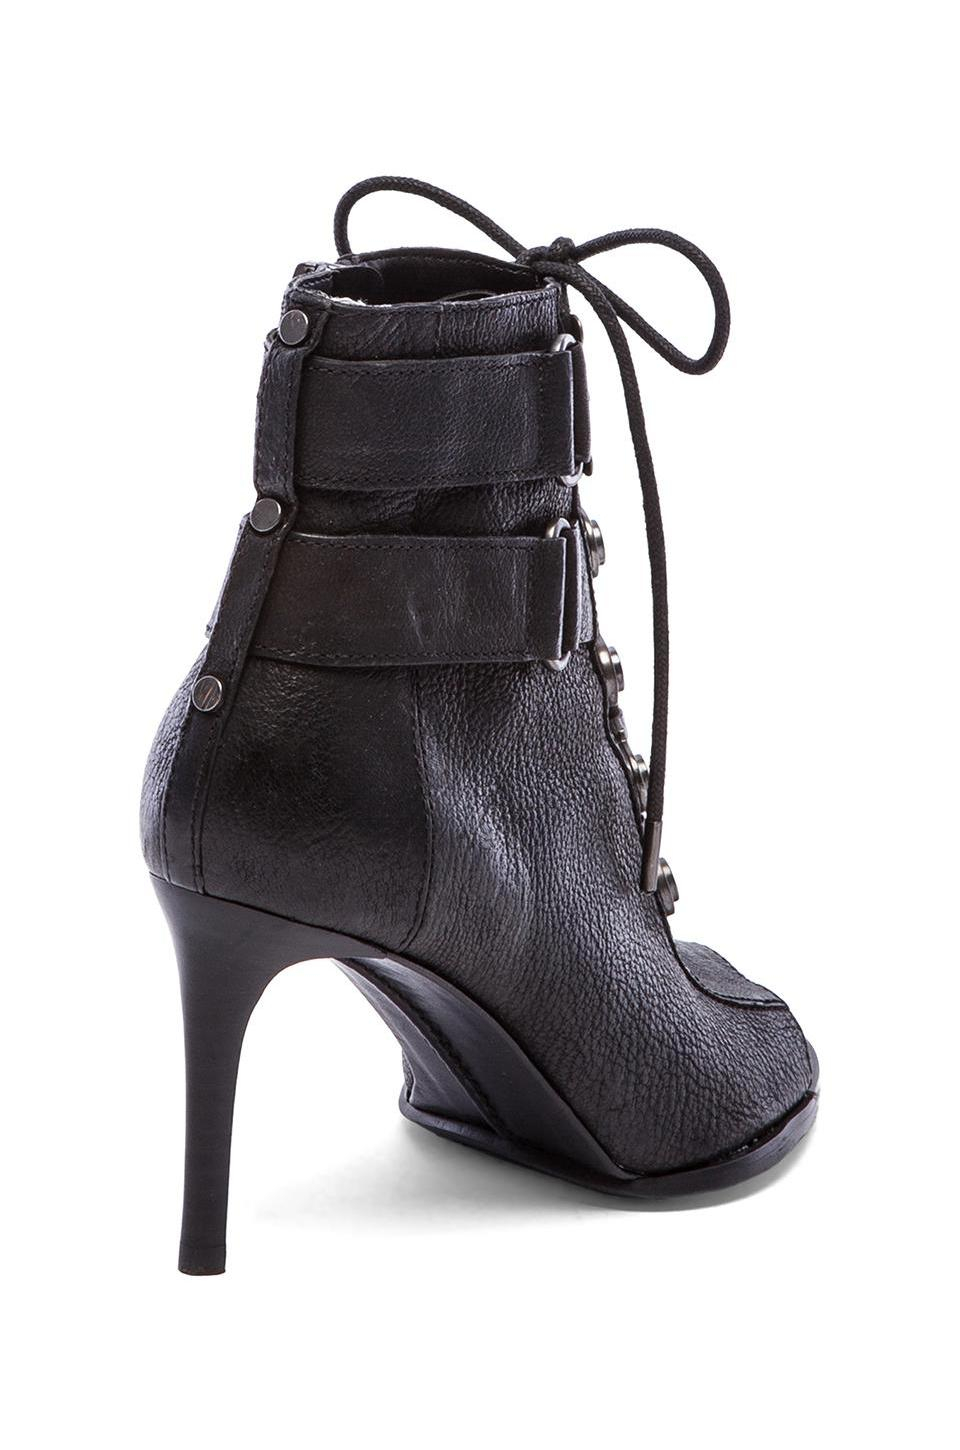 Lyst - Luxury rebel Cara Lace Up Open Toe Booties in Black